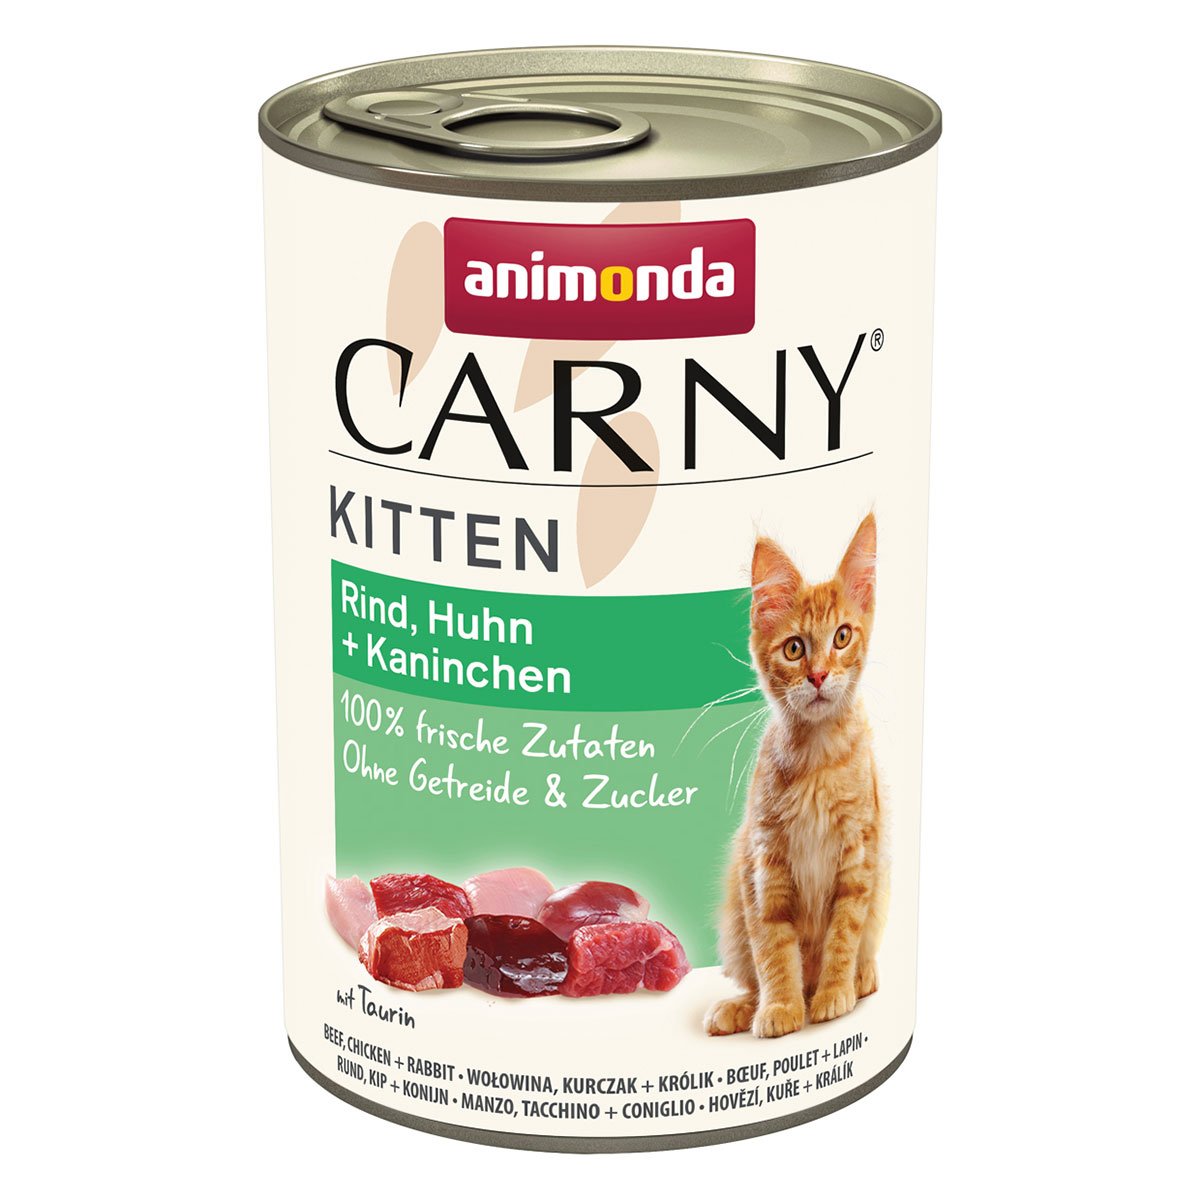 animonda Carny Kitten Rind, Huhn + Kaninchen 24x400g von animonda Carny